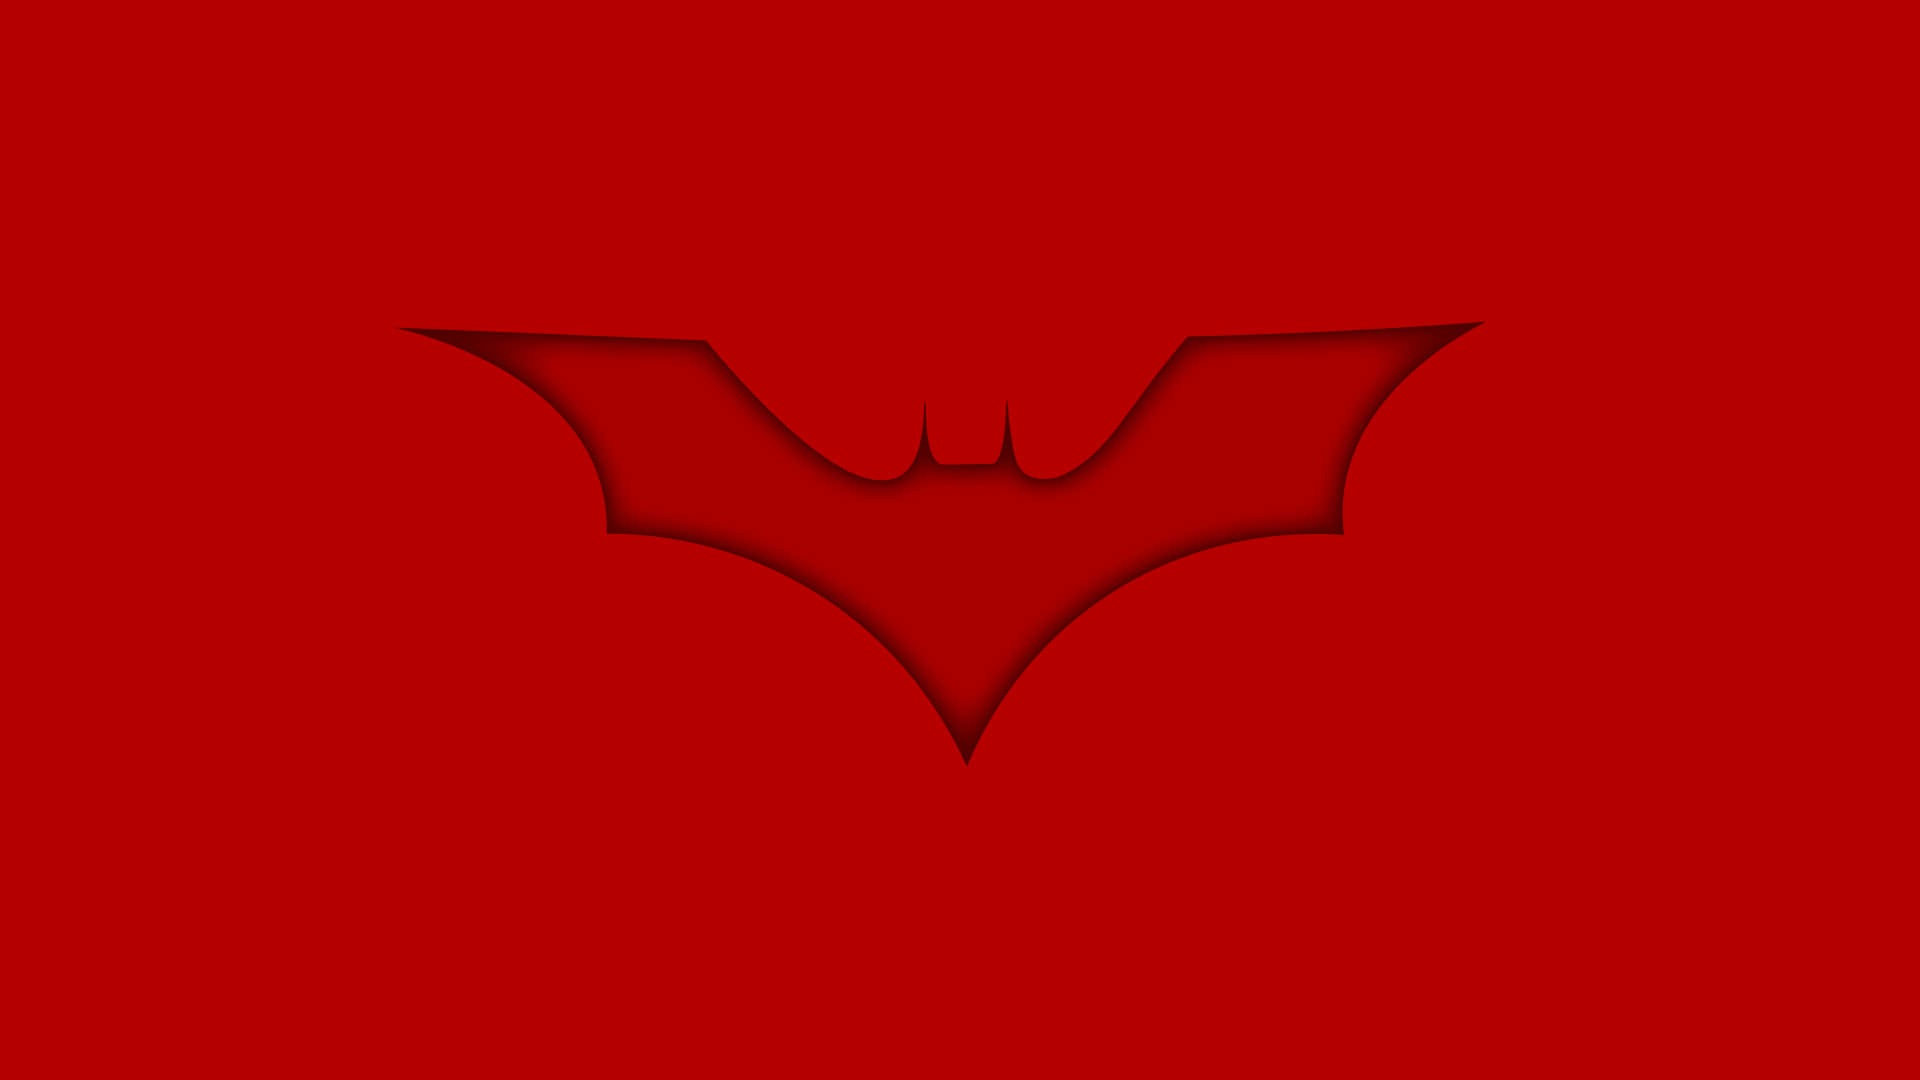 100+] Red Batman Logo Wallpapers